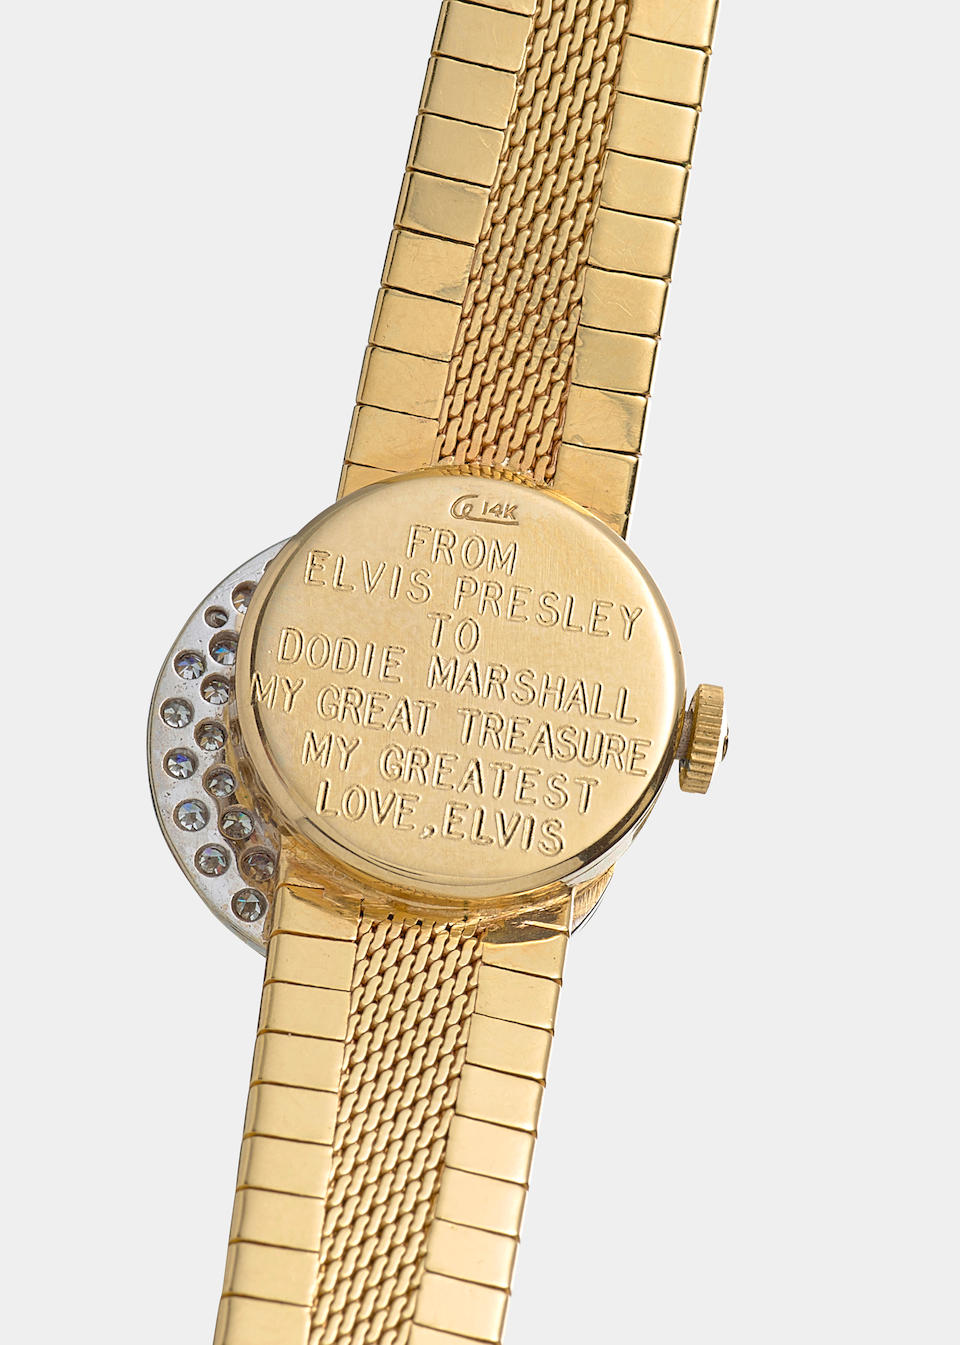 BAUME & MERCIER. A 14K GOLD AND DIAMOND SET MANUAL WIND BRACELET WATCHc. 1967 - Image 4 of 4